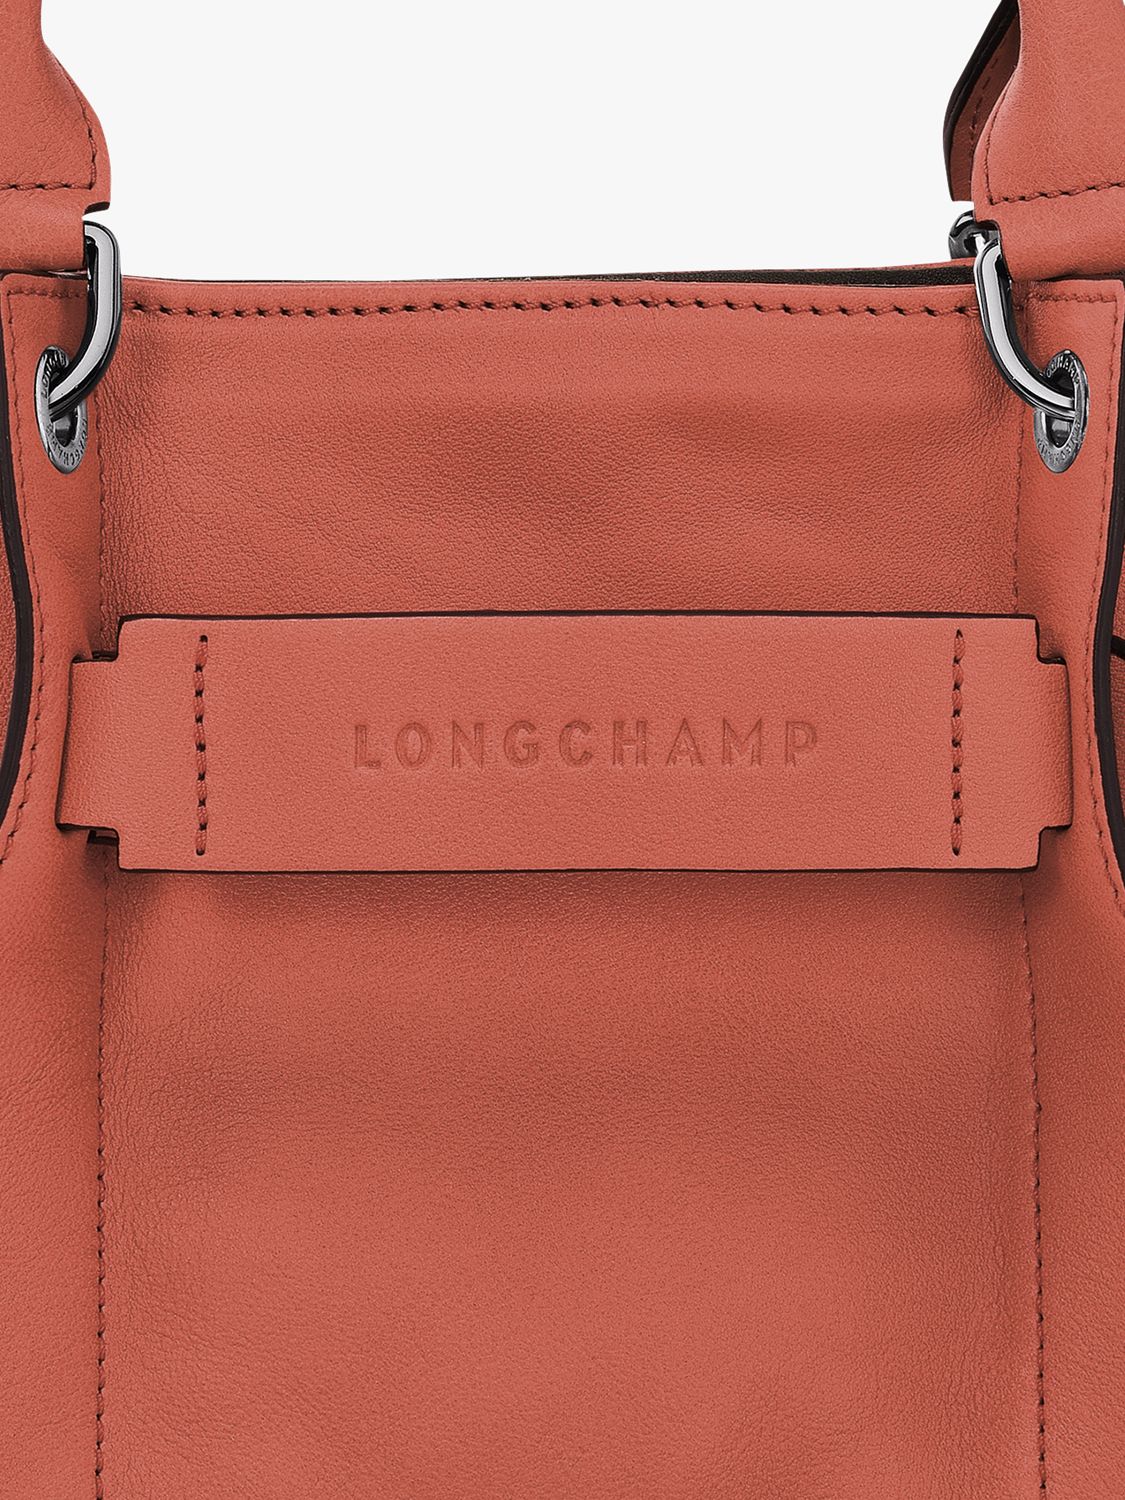 Buy Longchamp 3D Small Leather Crossbody Bag Online at johnlewis.com